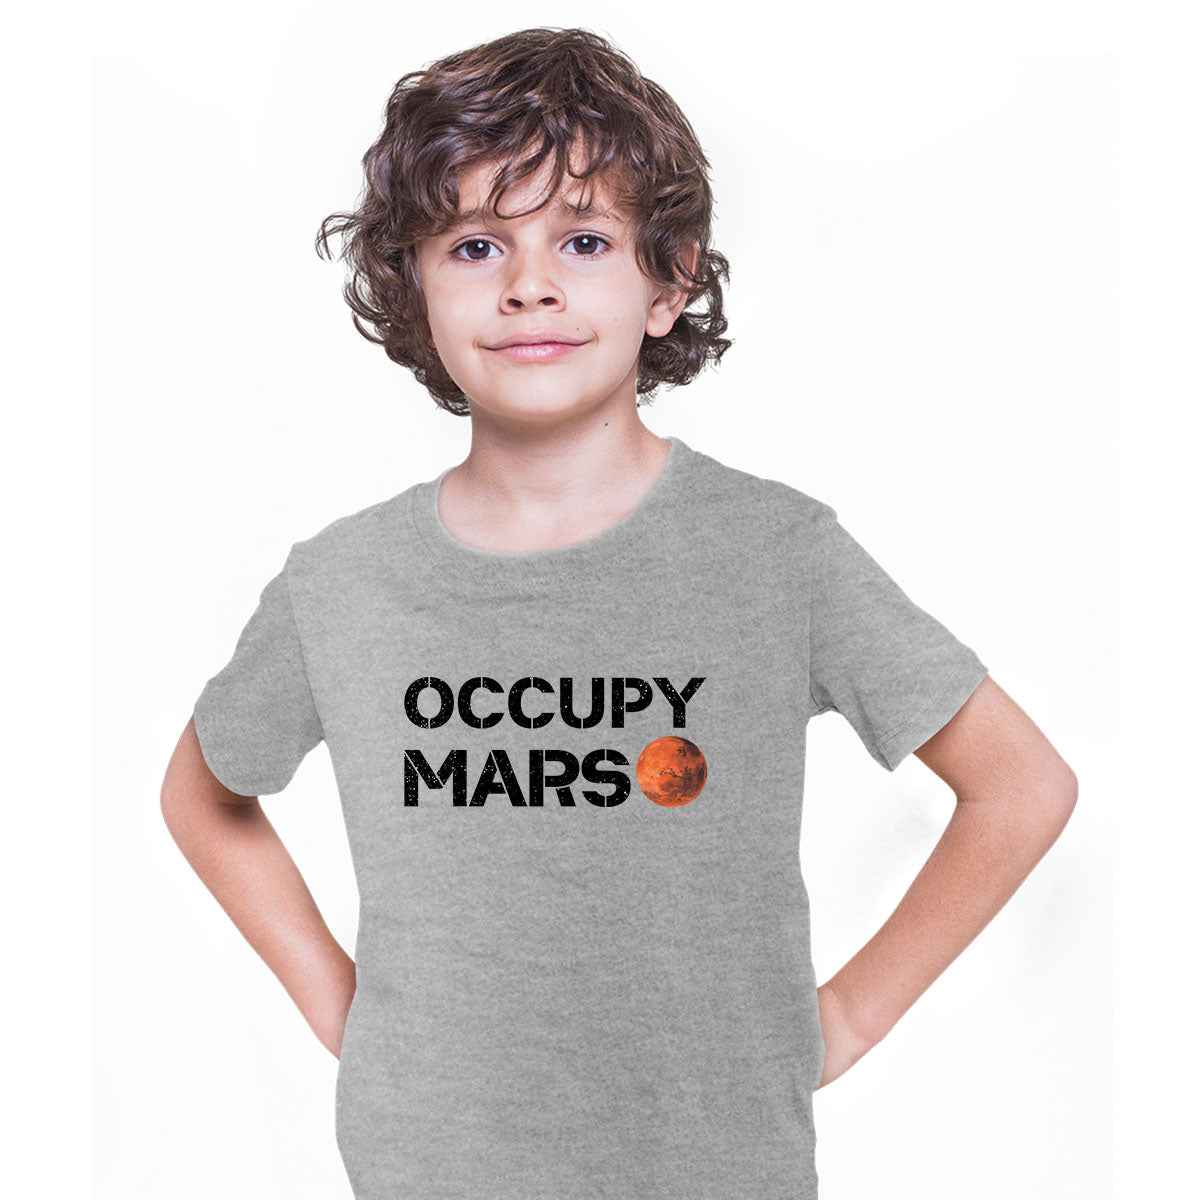 Occupy Mars Slogan Red Planet Landing 2021 Nasa perseverance T-shirt for Kids - Kuzi Tees